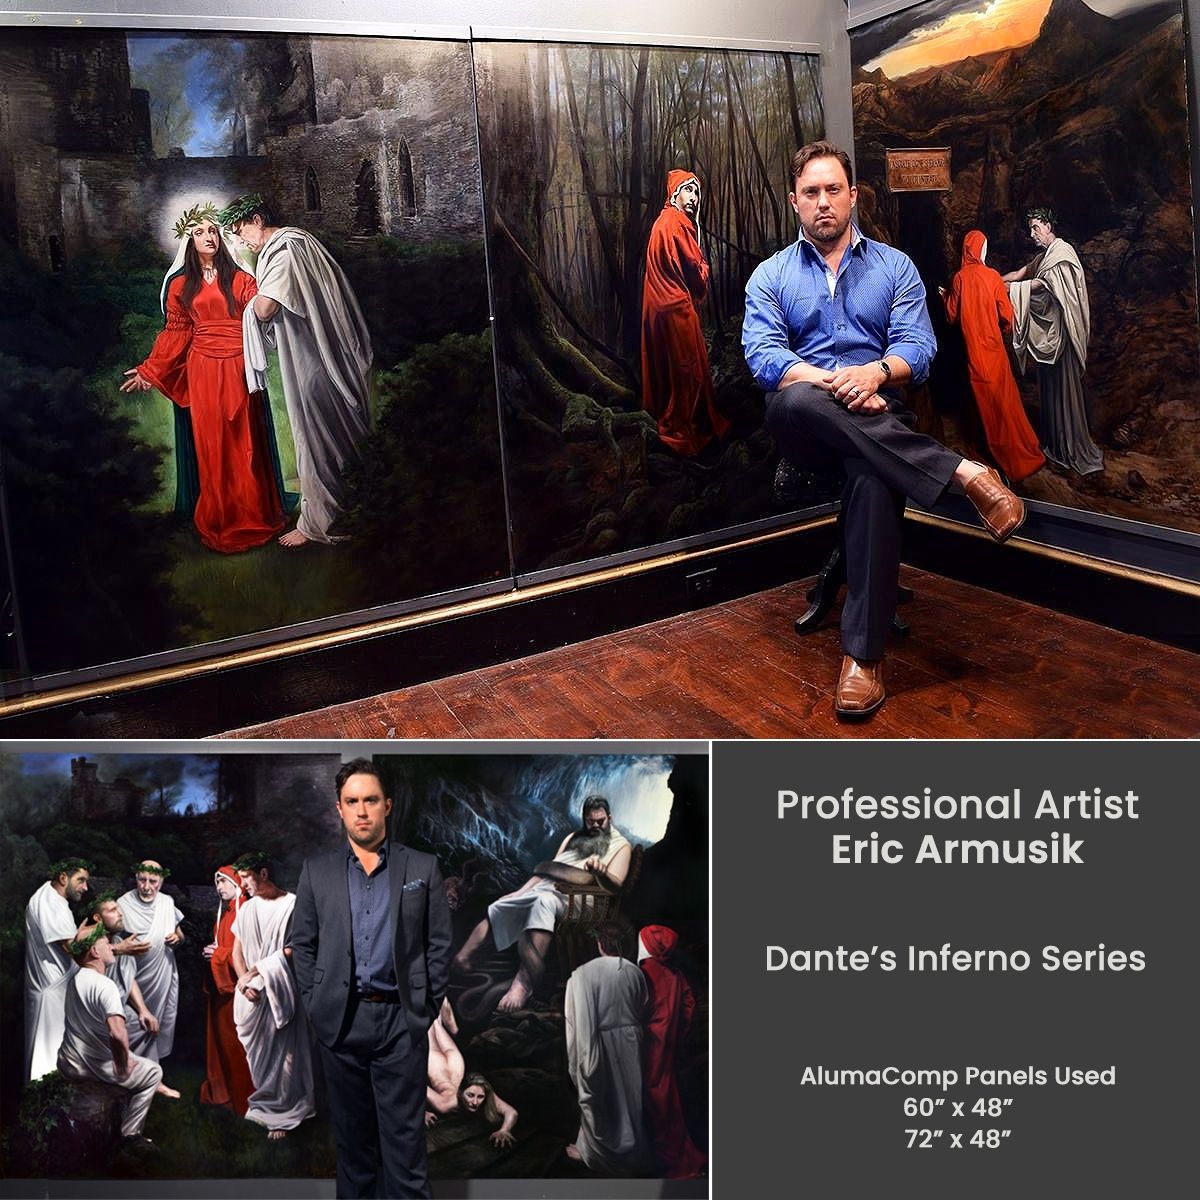 Professional Artist Eric Armusik, Dante's Inferno Series